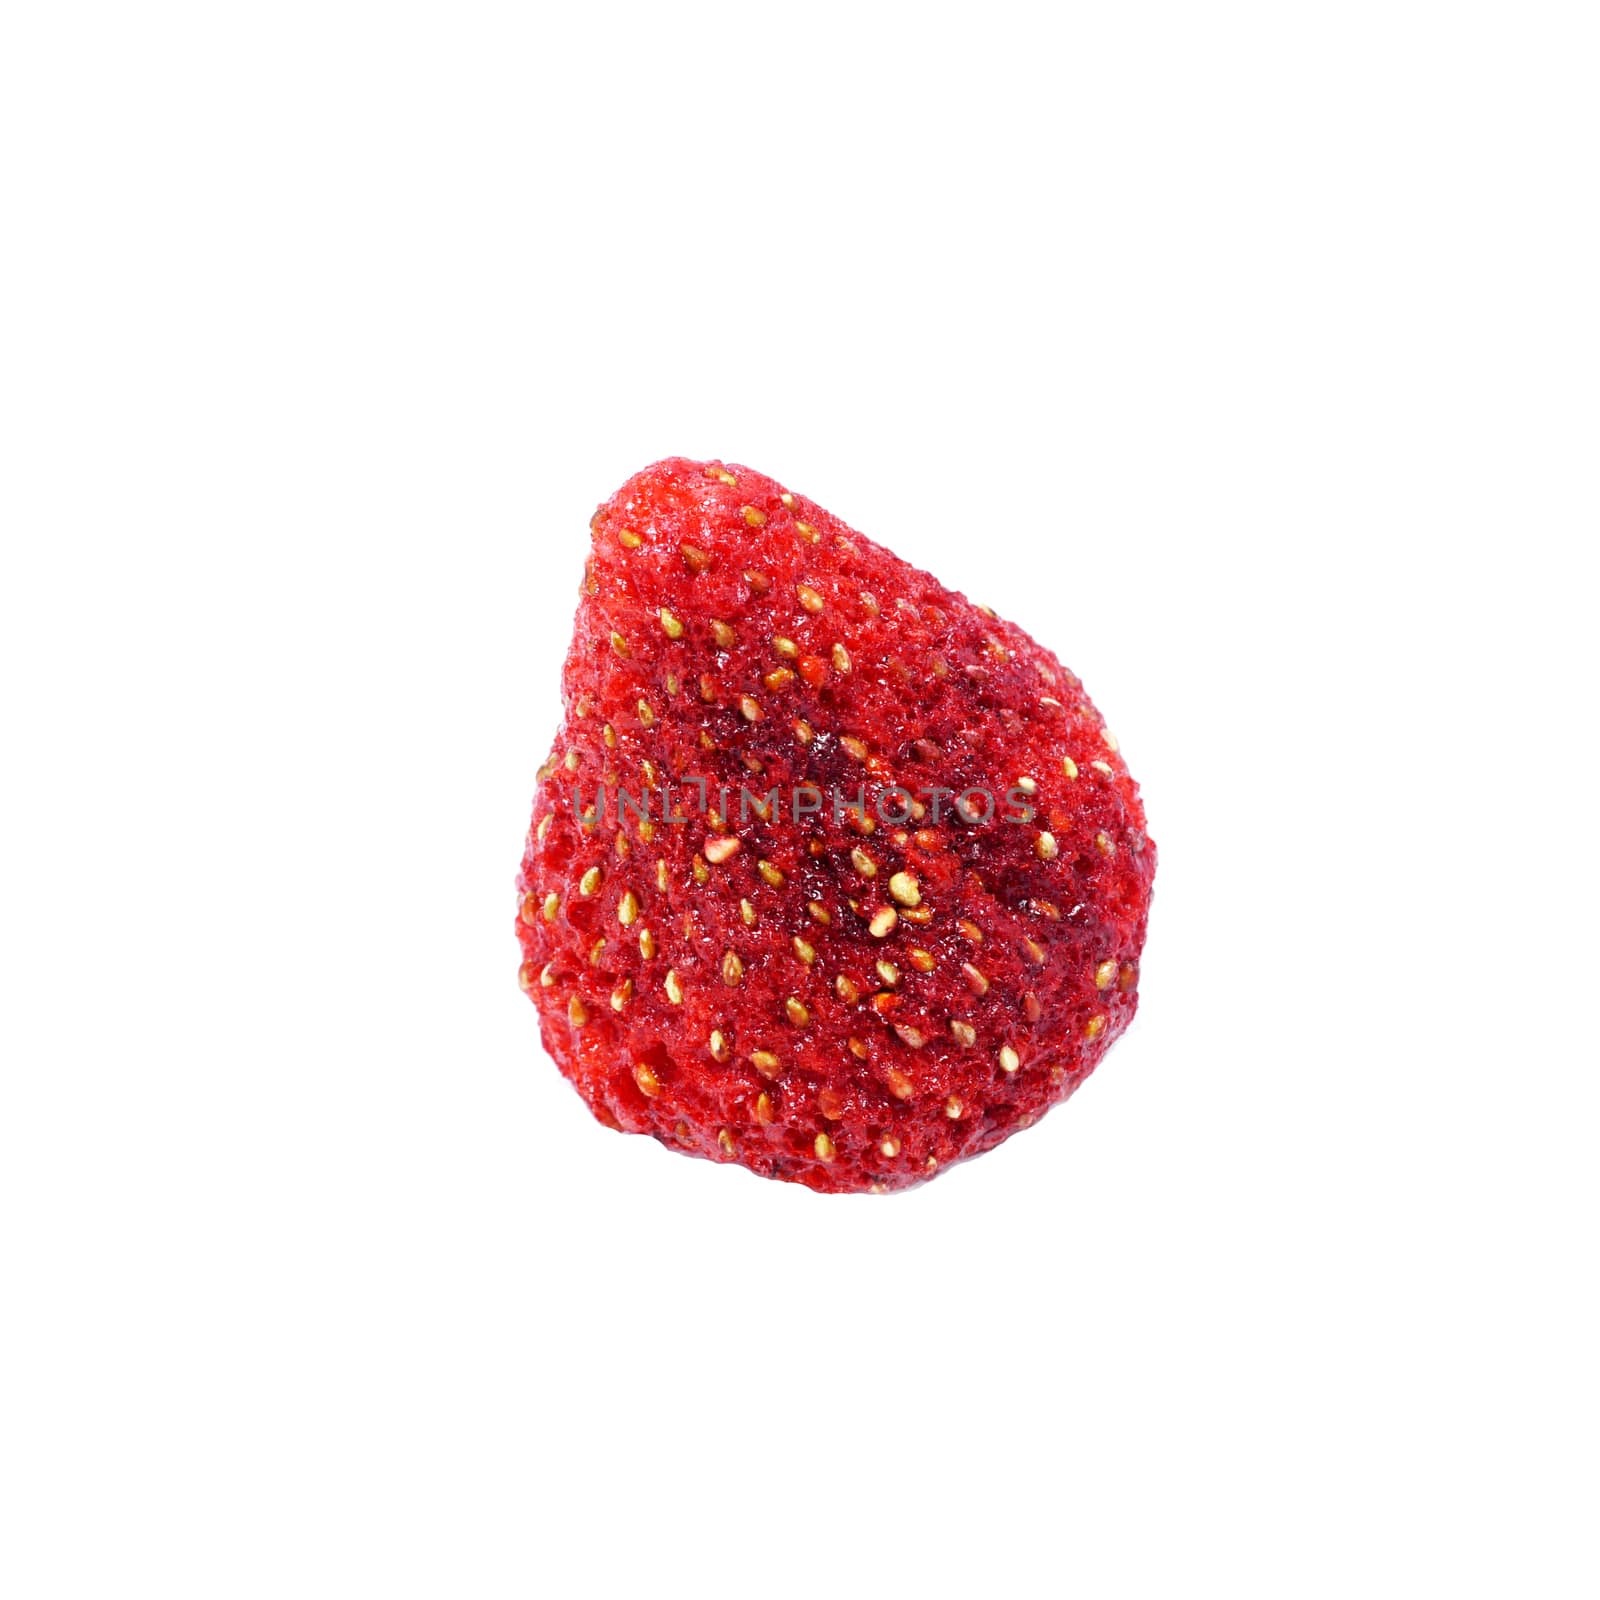 Crispy Strawberry on white background.